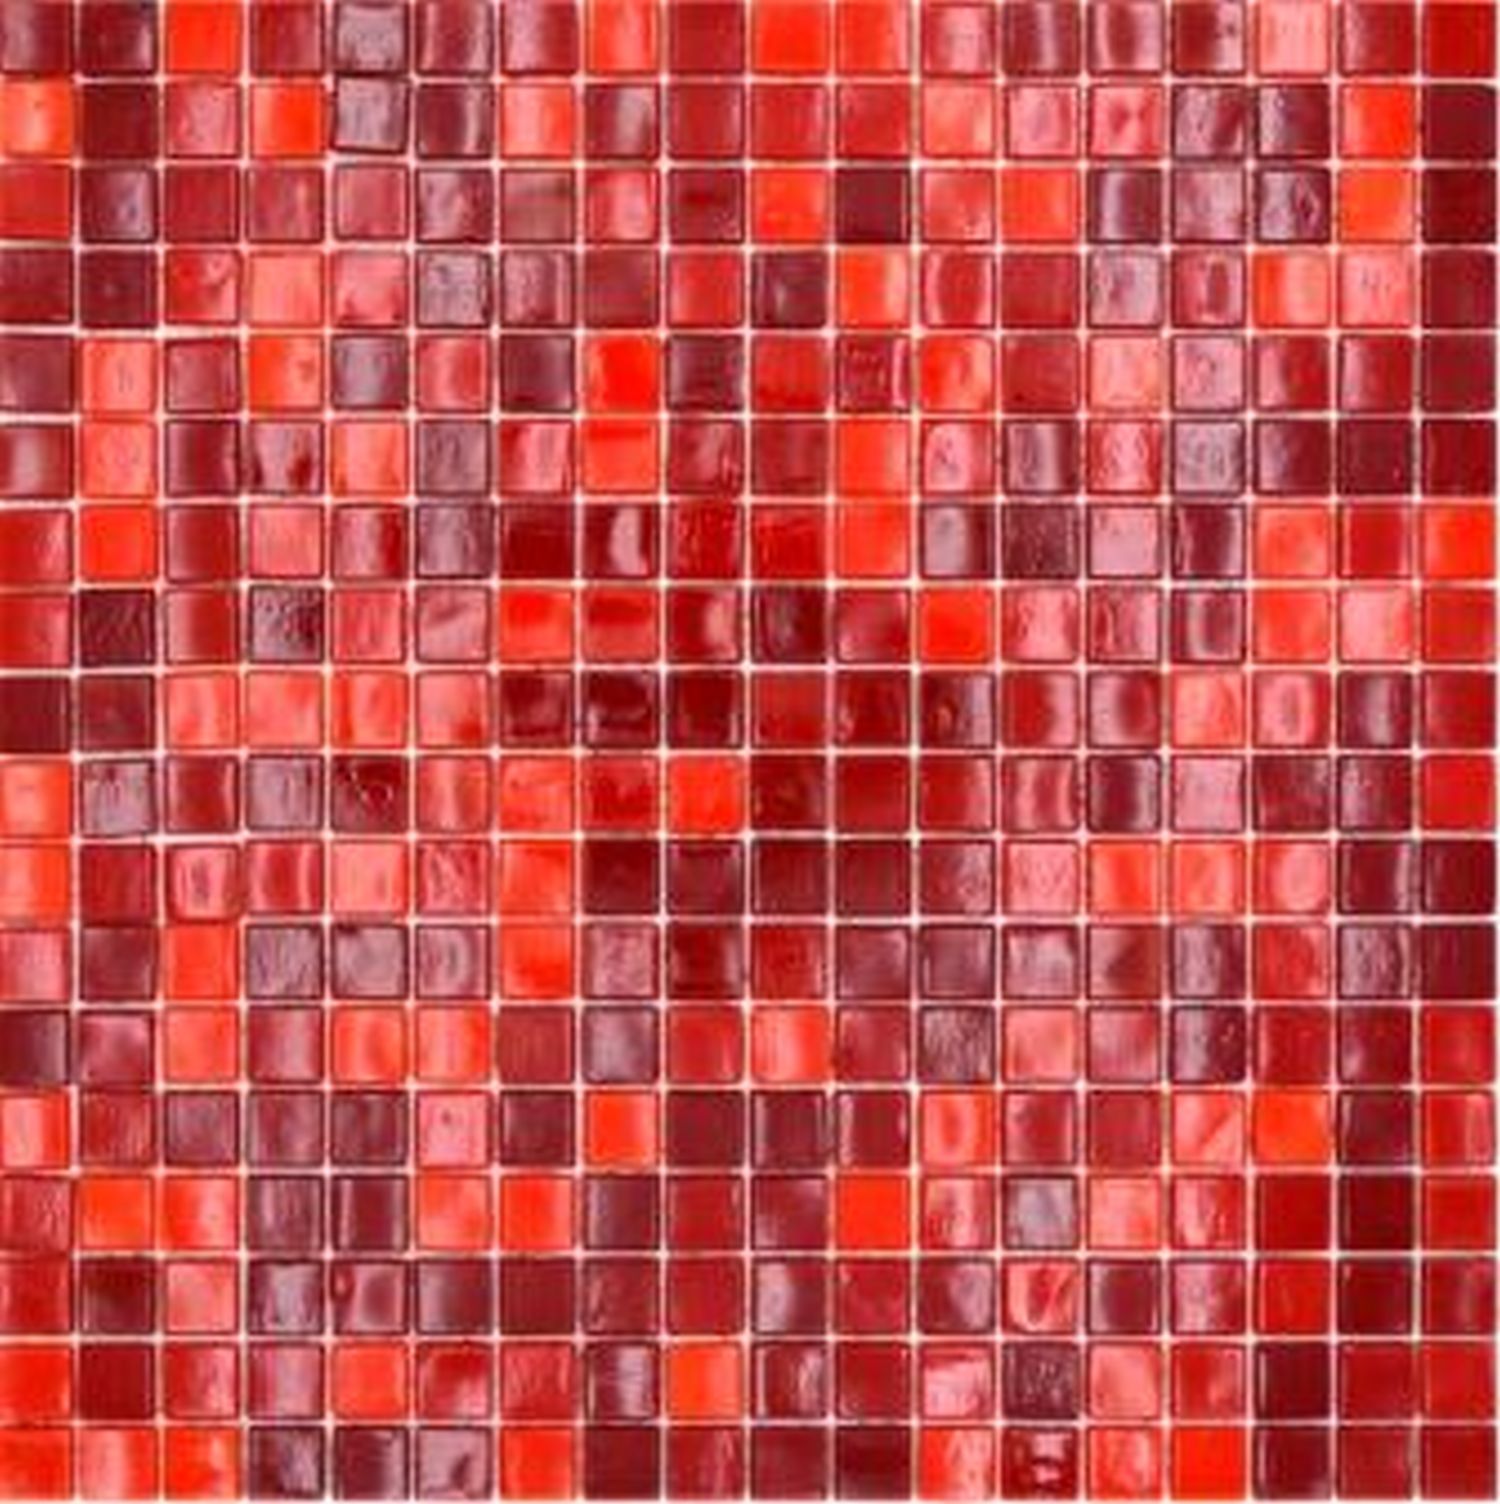 Glass glass mosaic red wall tile backsplash kitchen bathroom MOS58-0009_f | 10 mosaic mats